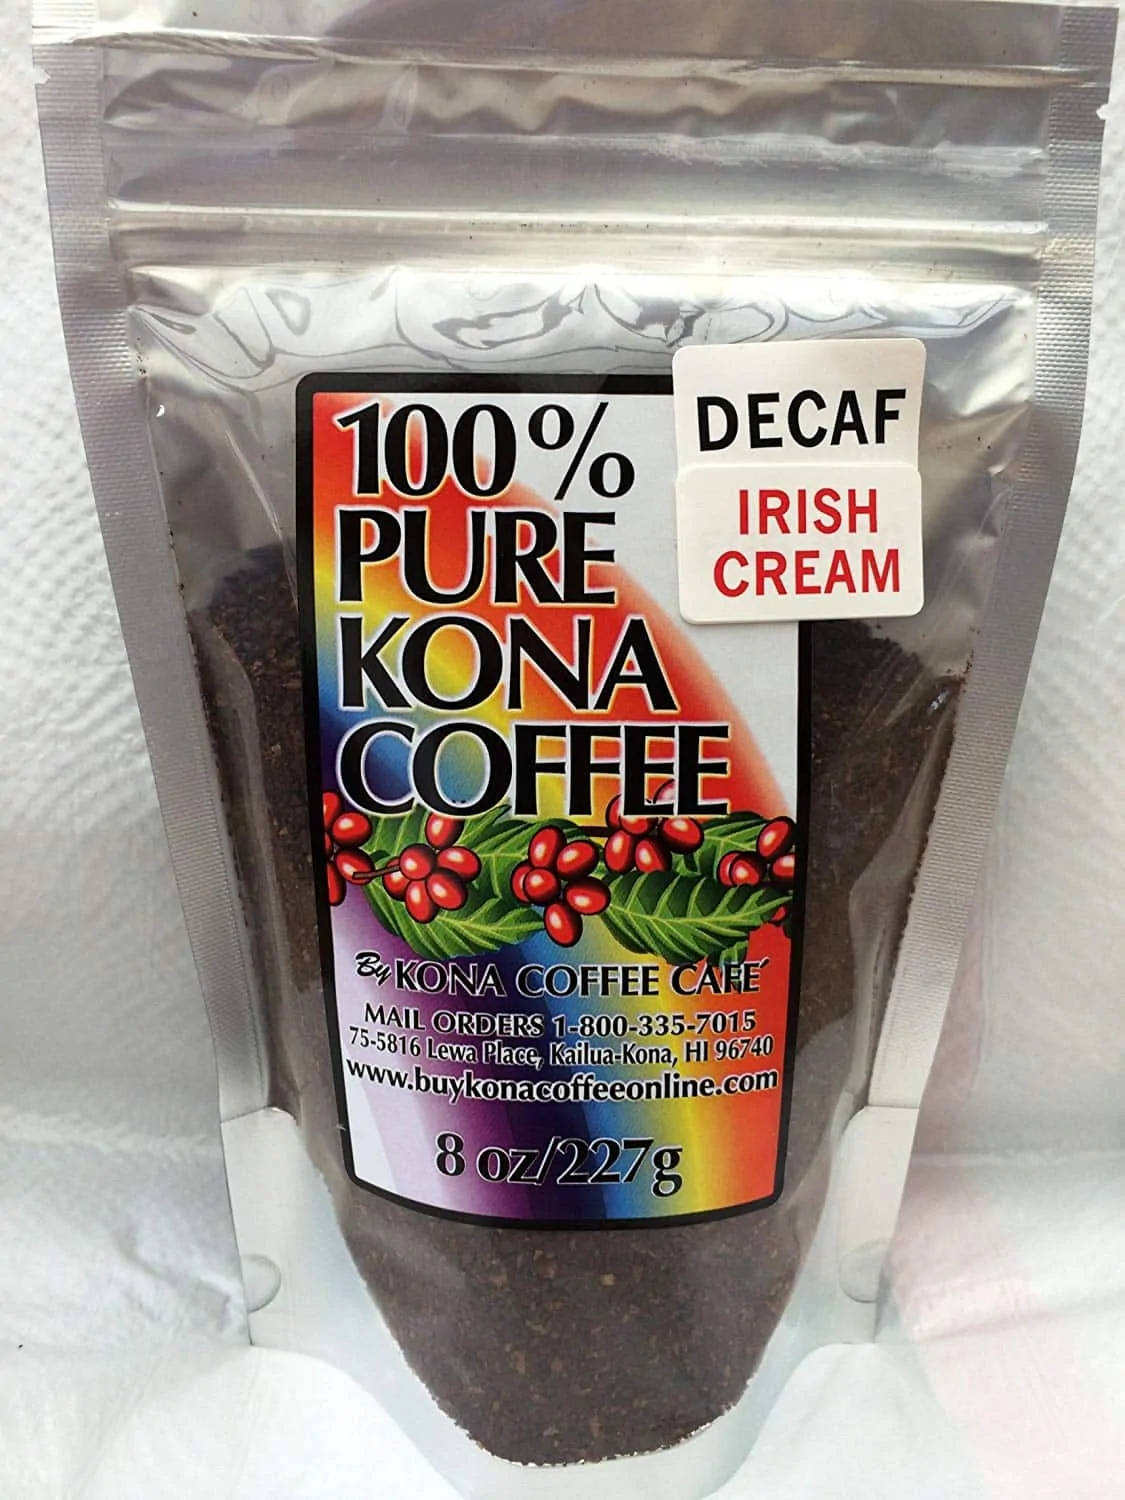 Decaf Kona Coffee, Irish Cream Flavored